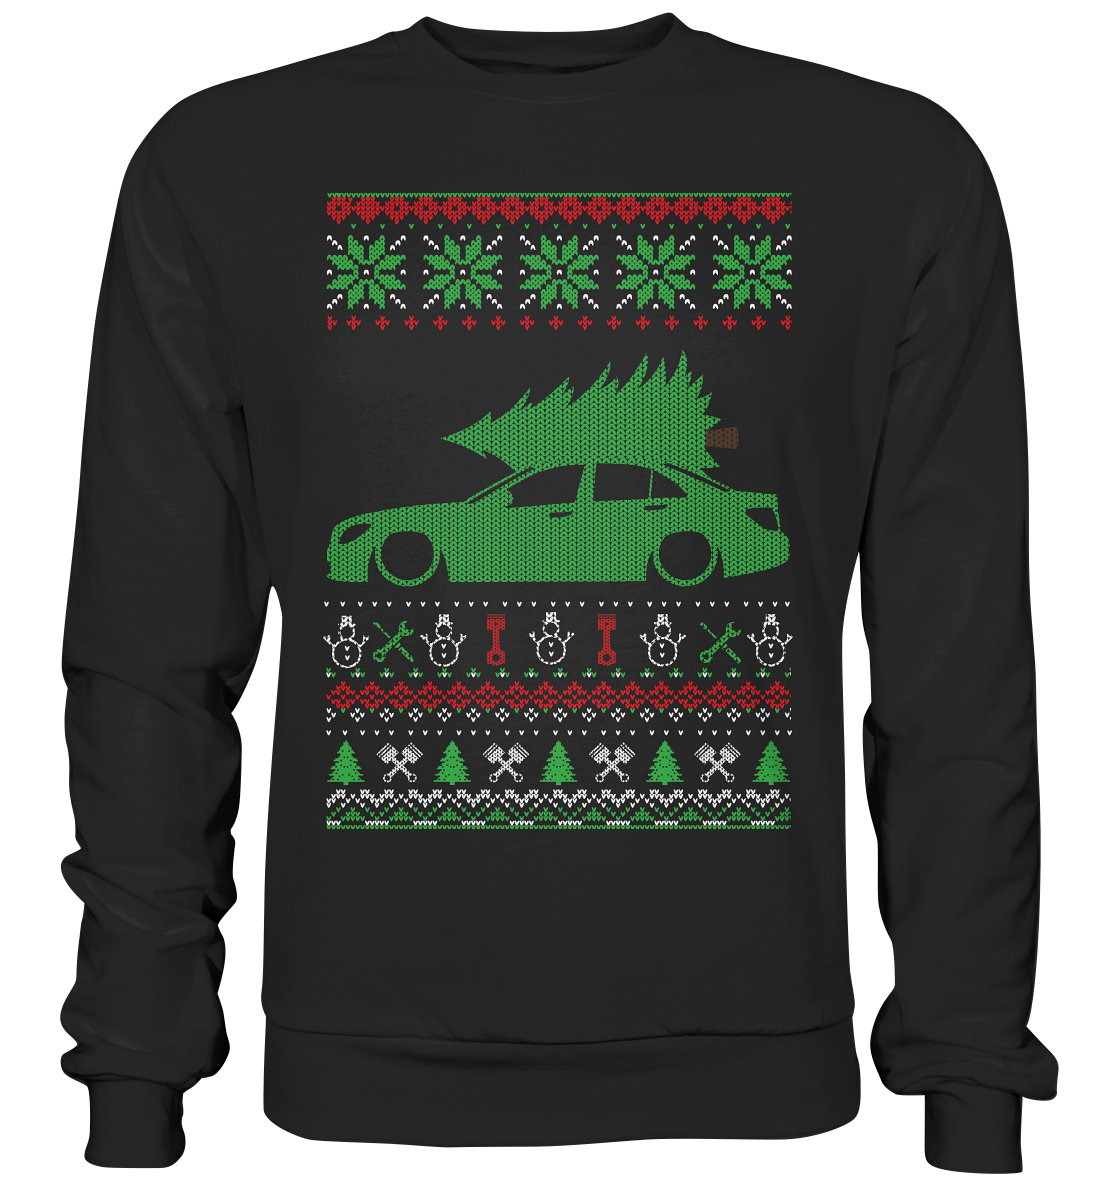 CODUGLY_MGKW204 - Premium Sweatshirt